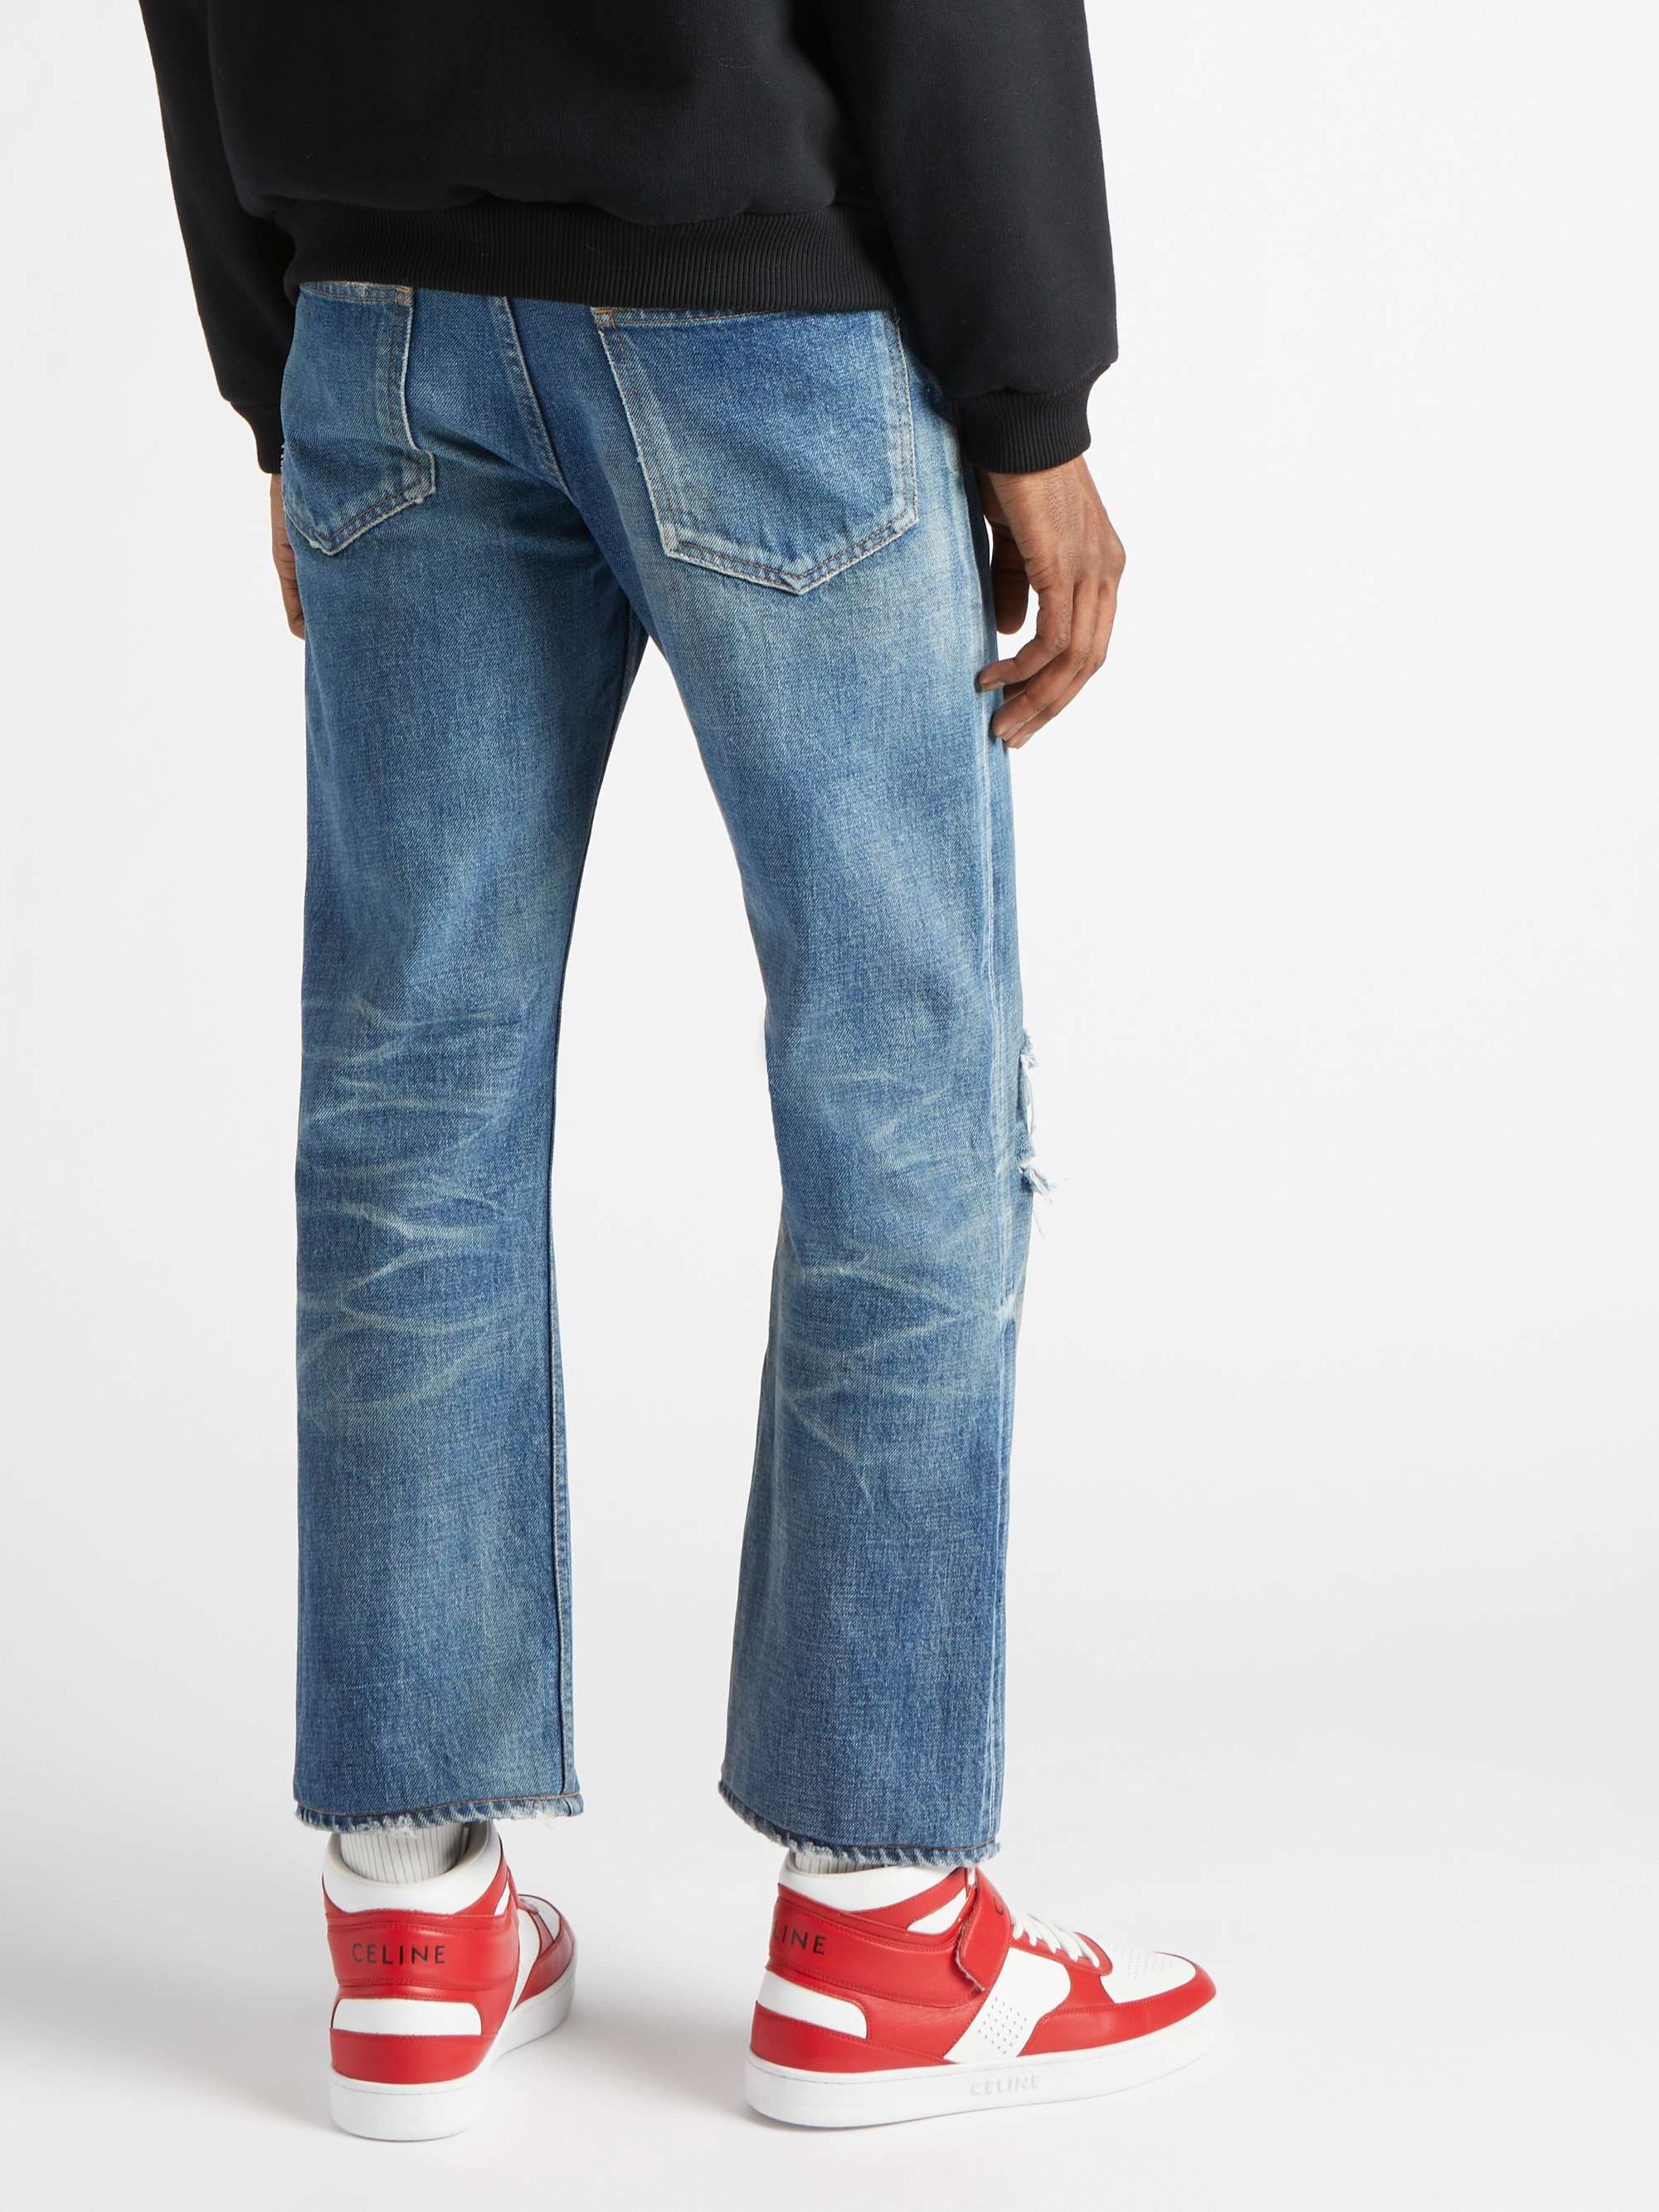 CELINE HOMME Kurt Slim-Fit Cropped Distressed Selvedge Jeans